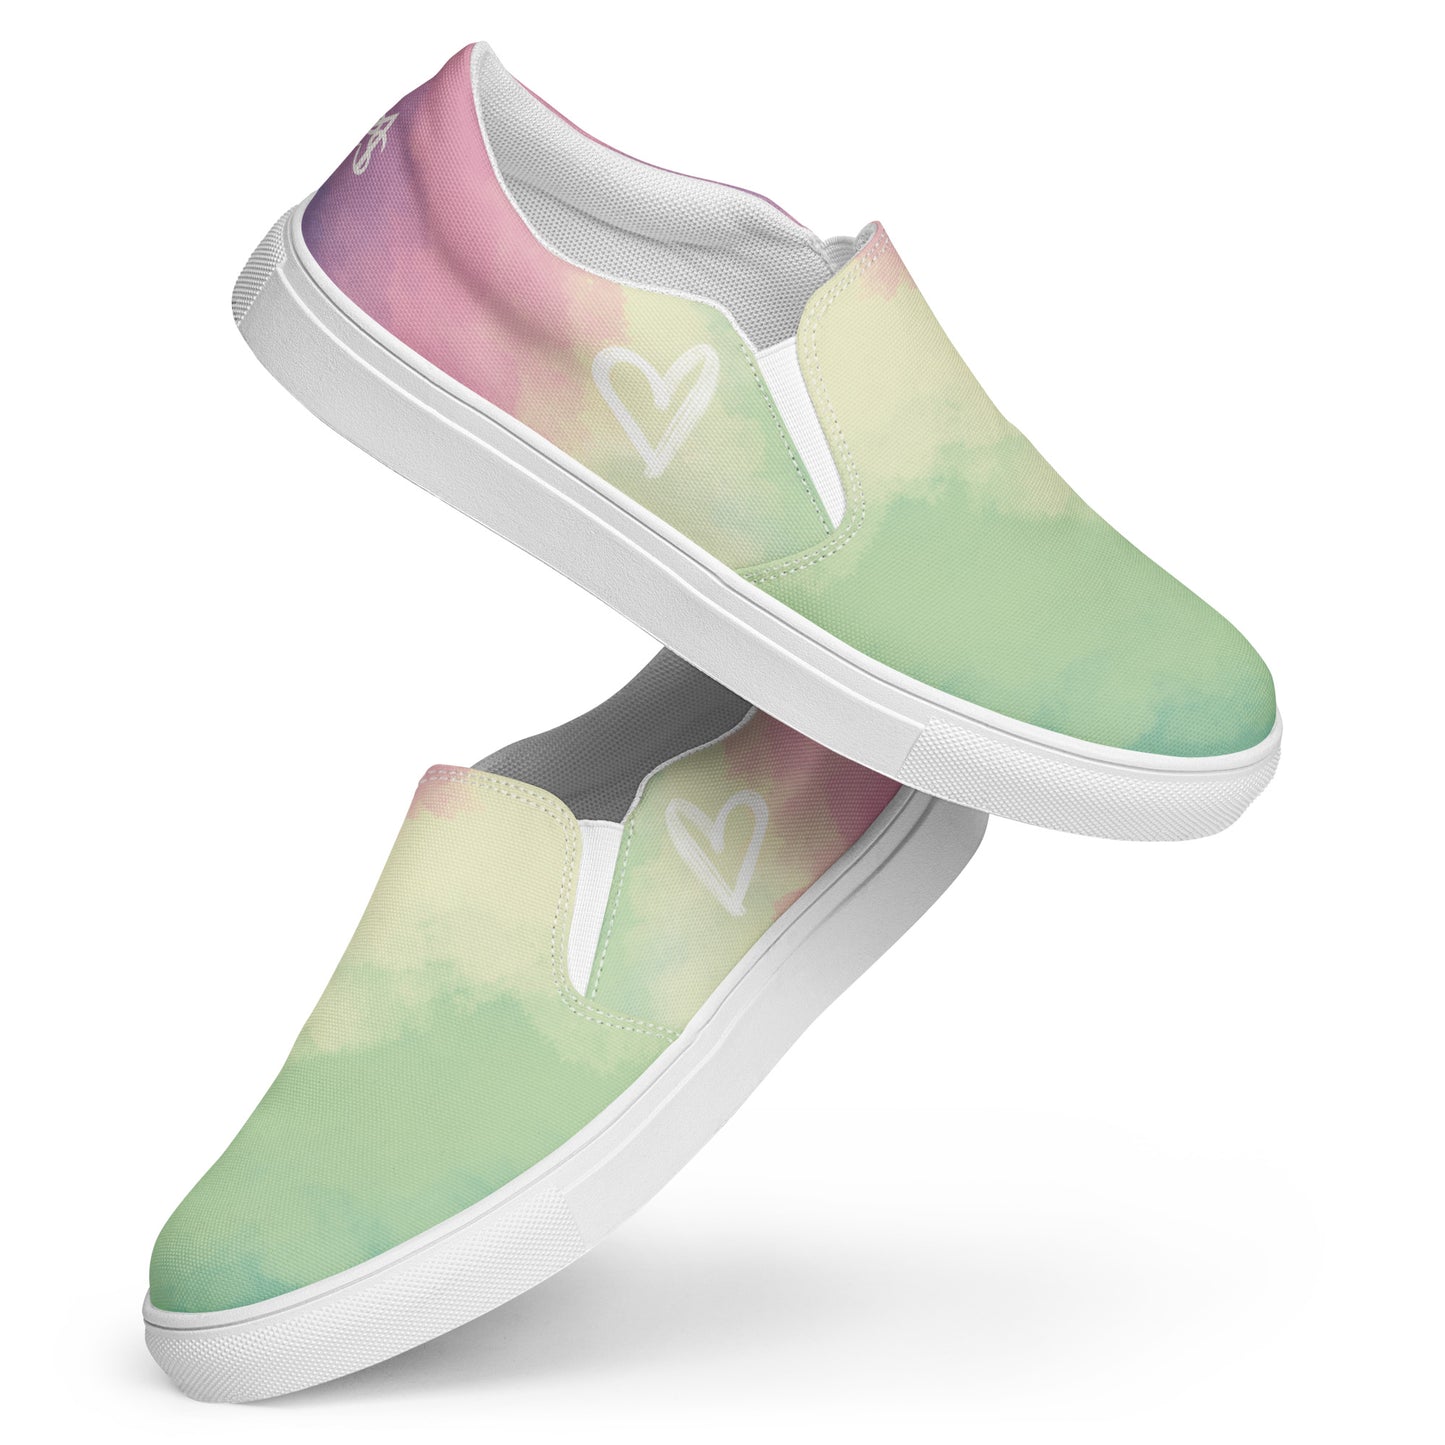 Cloudy Genderfae Slip-on Canvas Shoes (Masc Sizing)